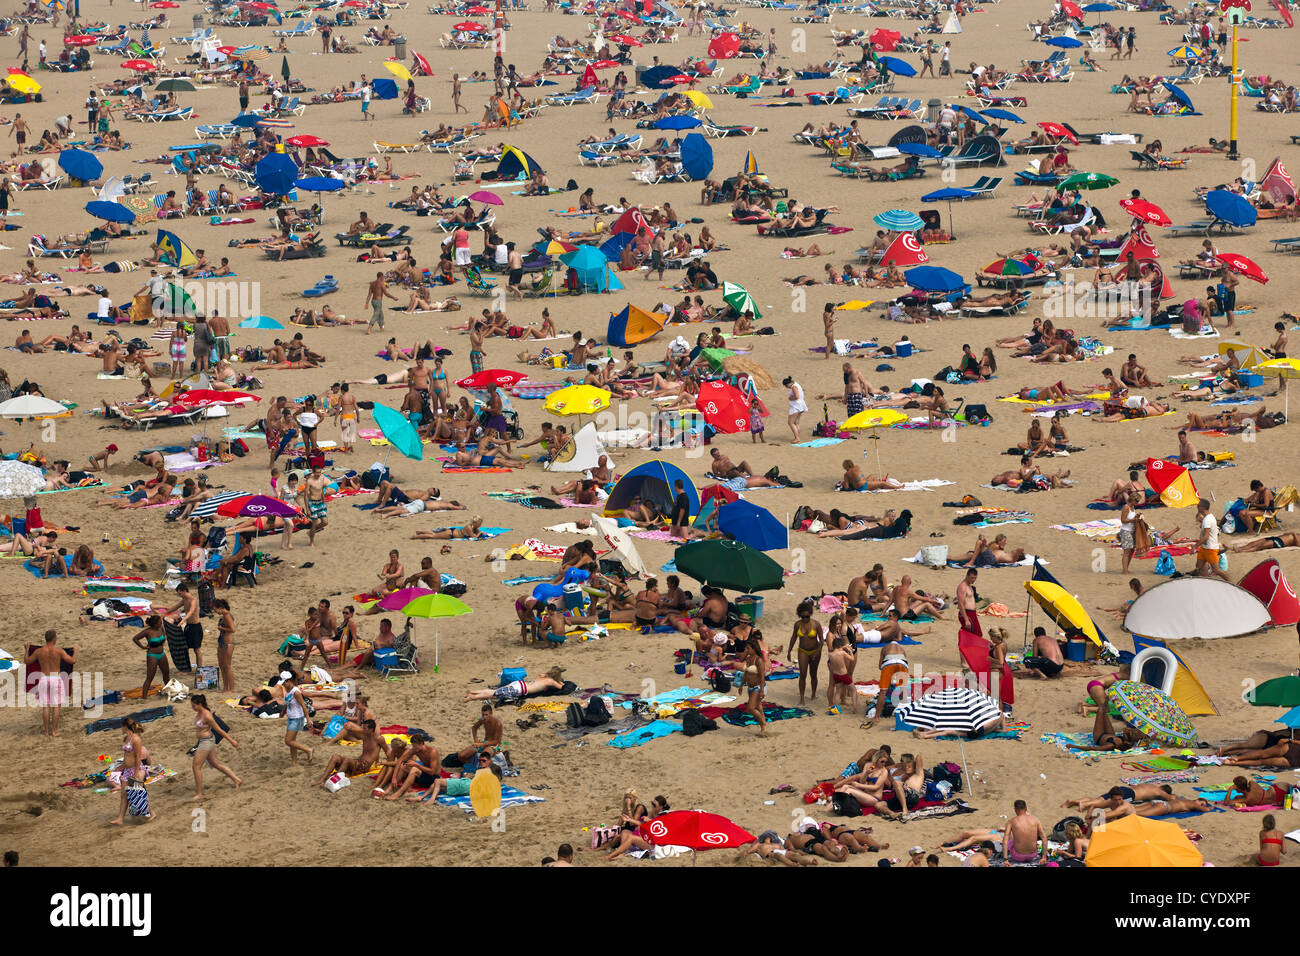 The Netherlands, Scheveningen, near The Hague or in Dutch: Den Haag. People sunbathing on the beach. Summertime. Aerial Stock Photo